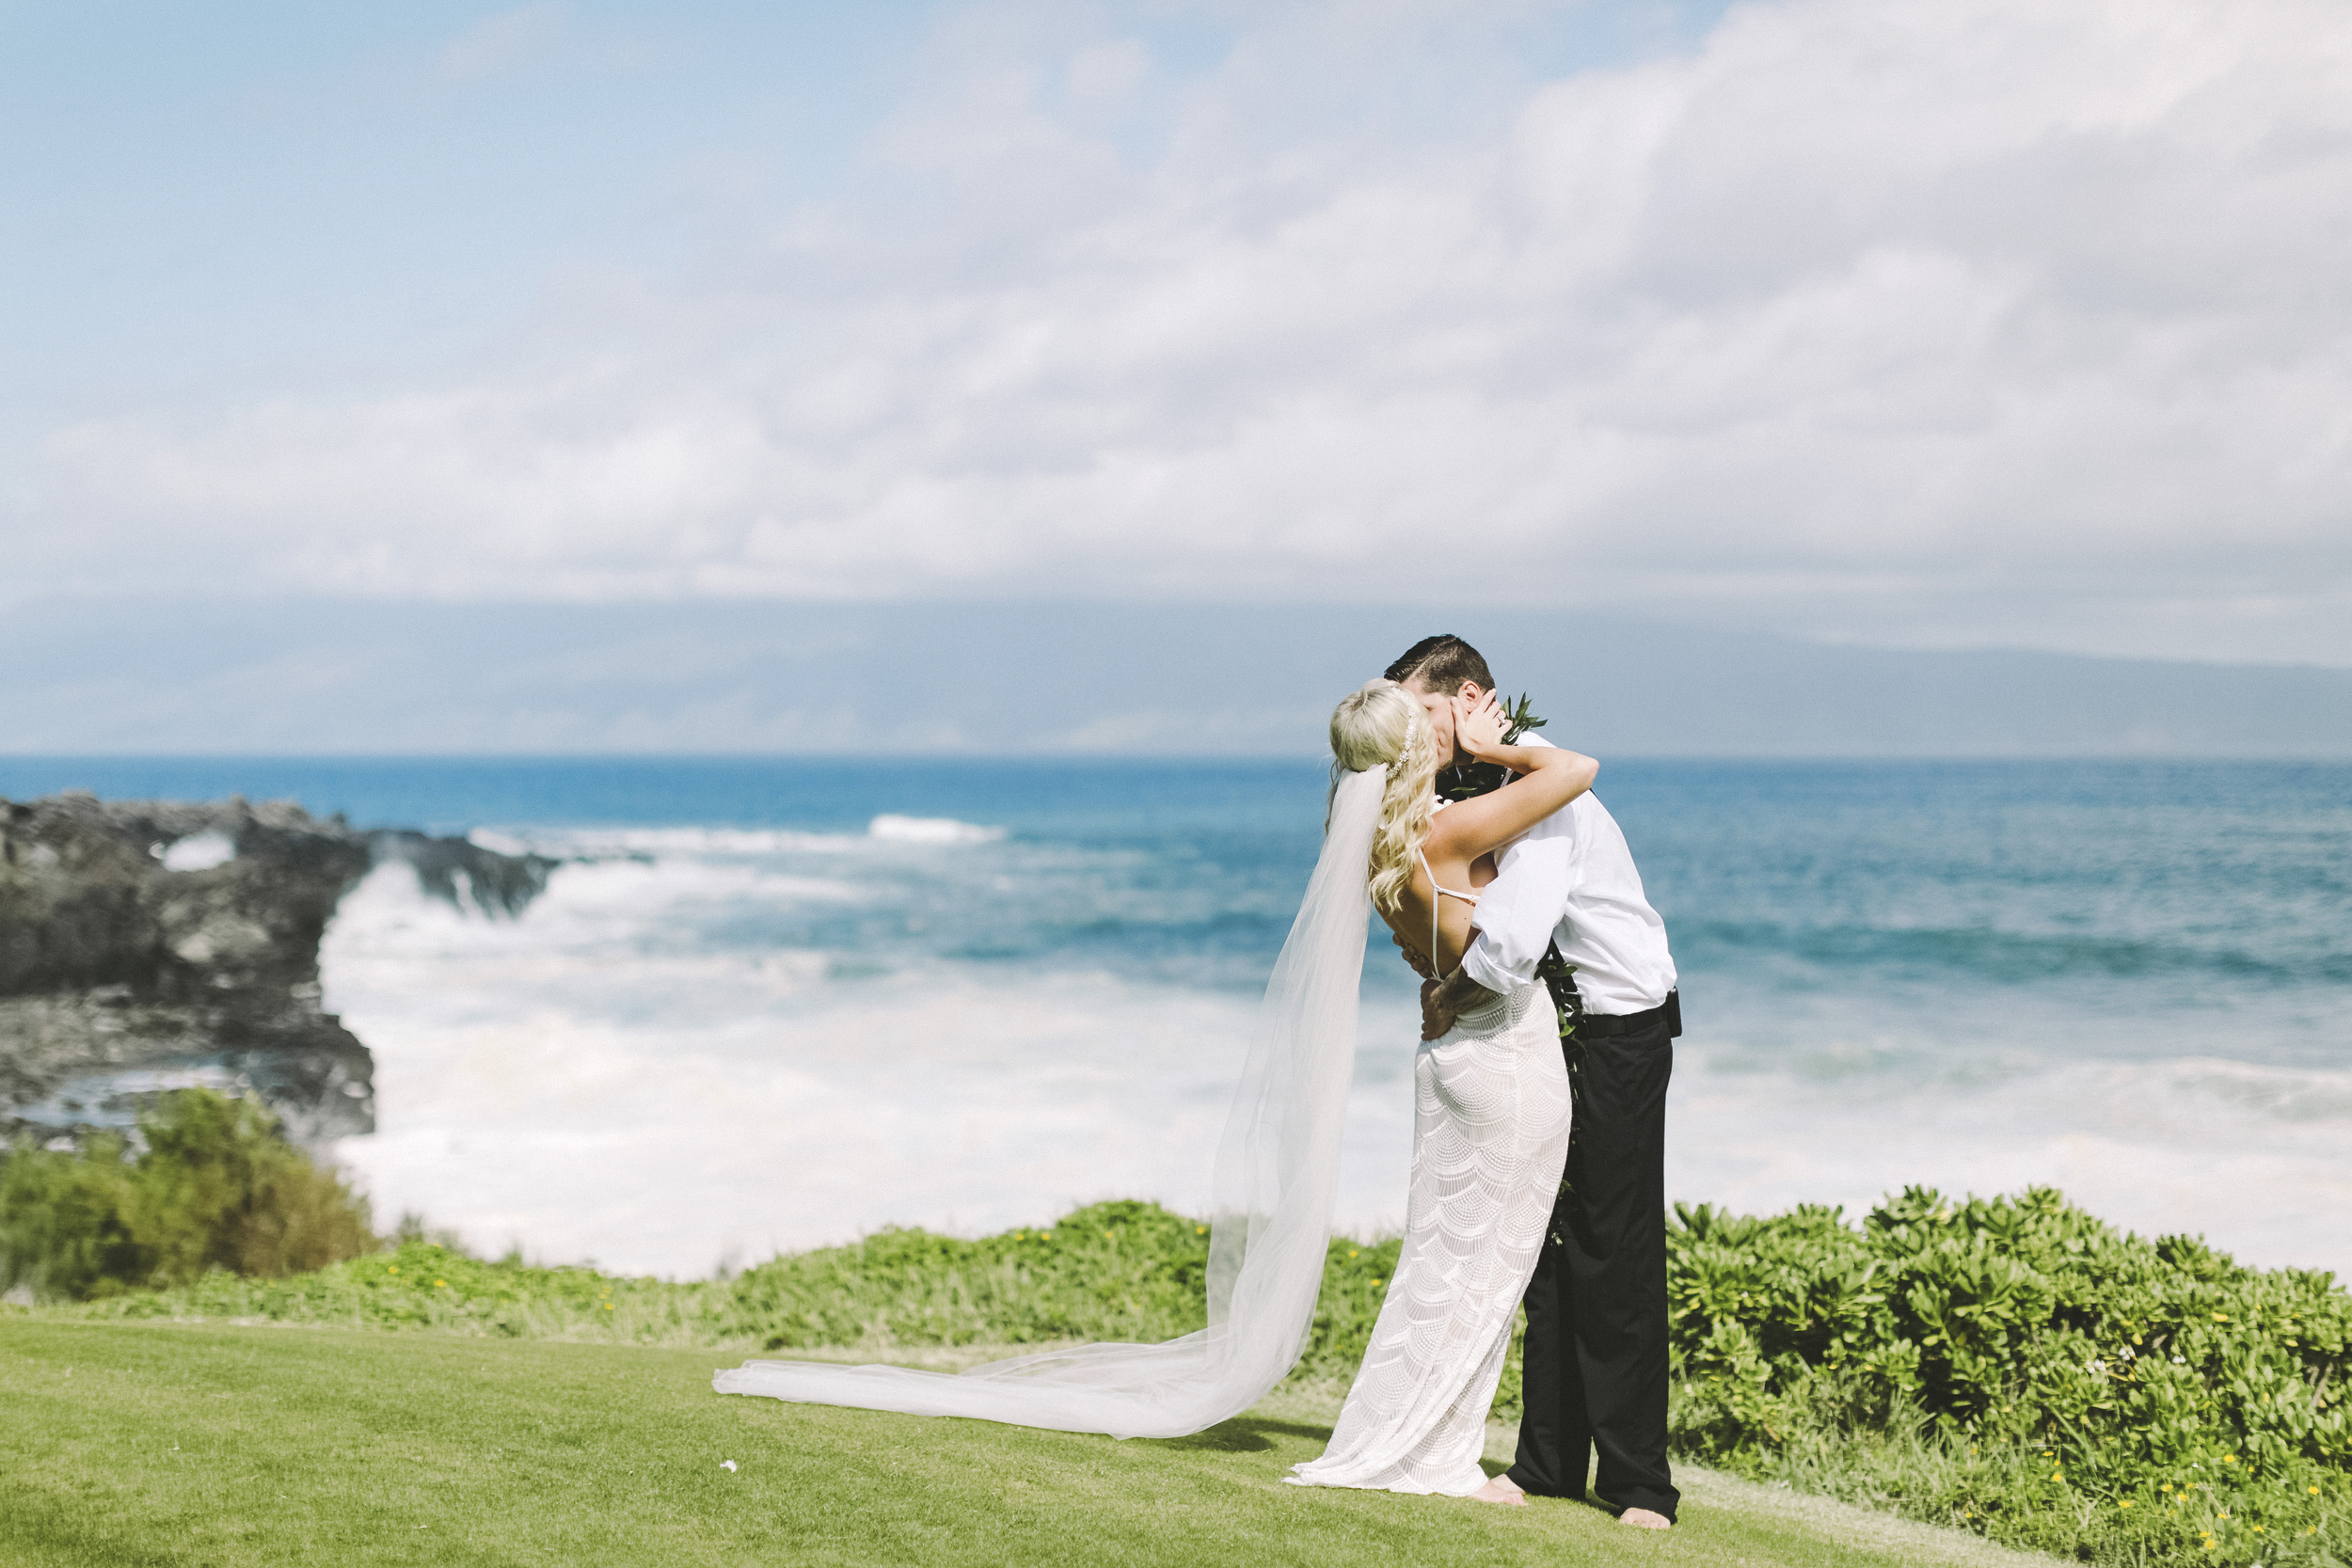 angie-diaz-photography-hawaii-wedding-21.jpg